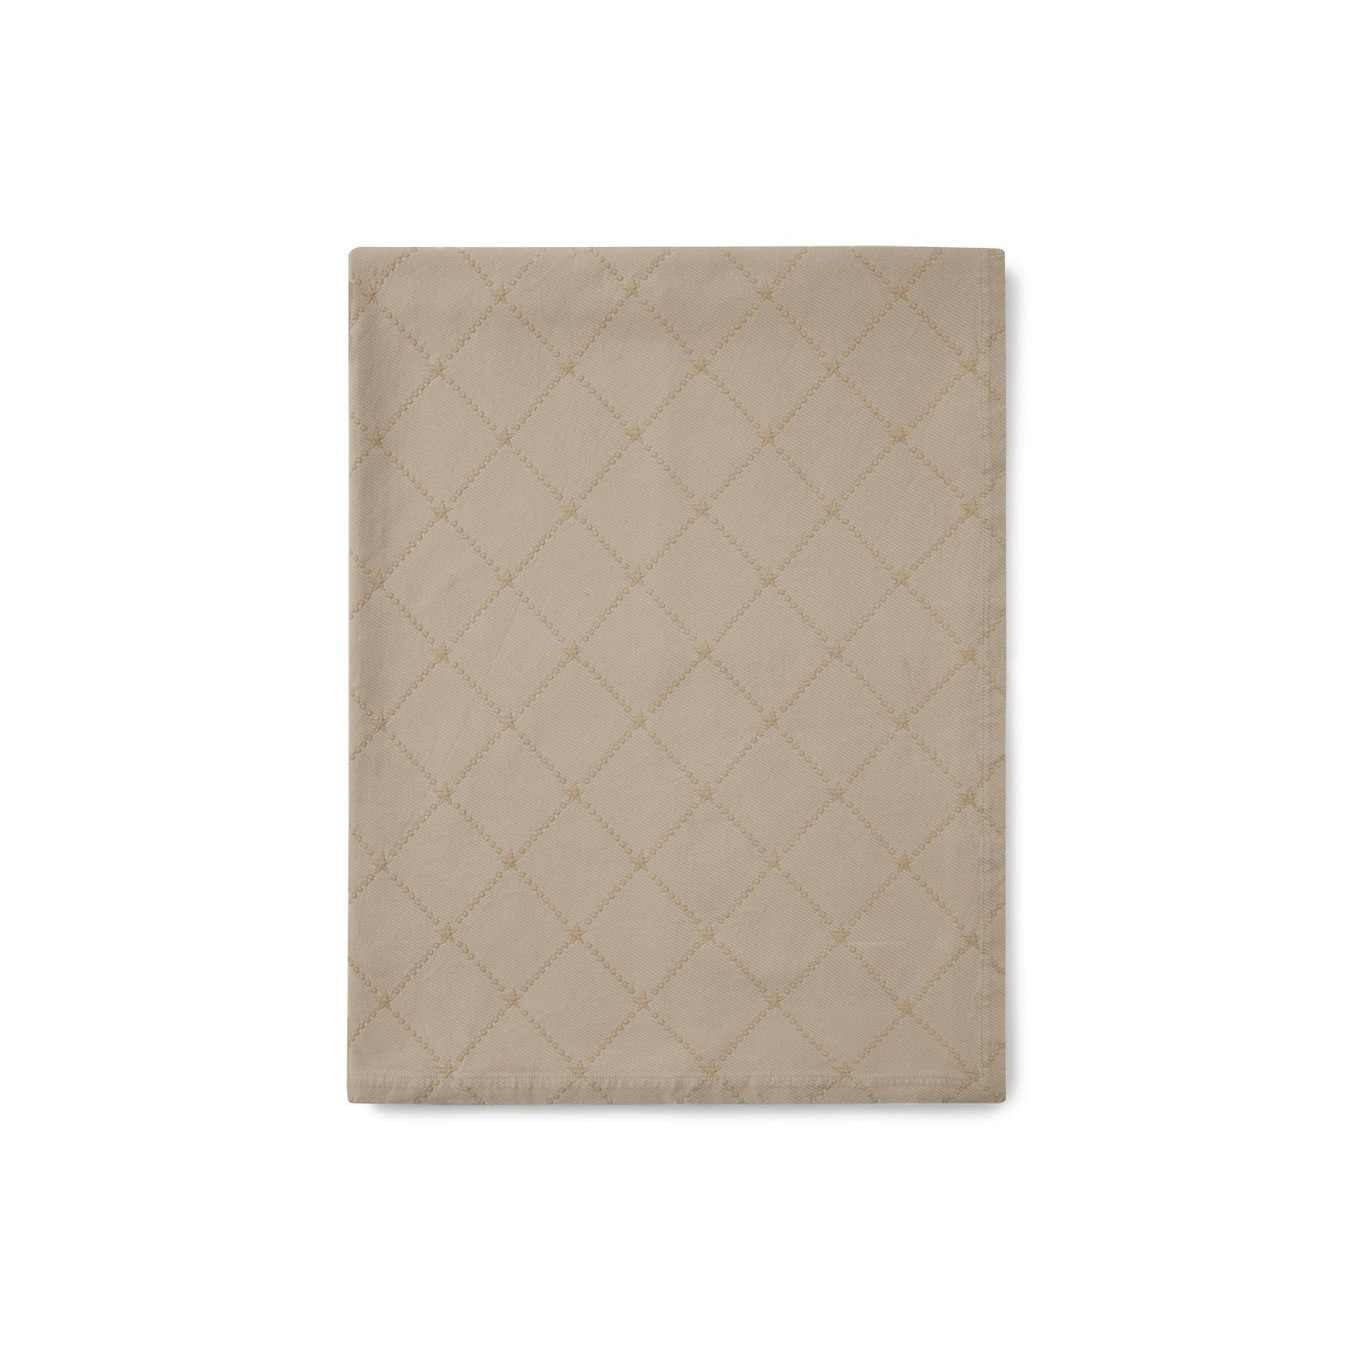 Signature Star Jacquard Cotton Bedspread 260x240 cm, Beige